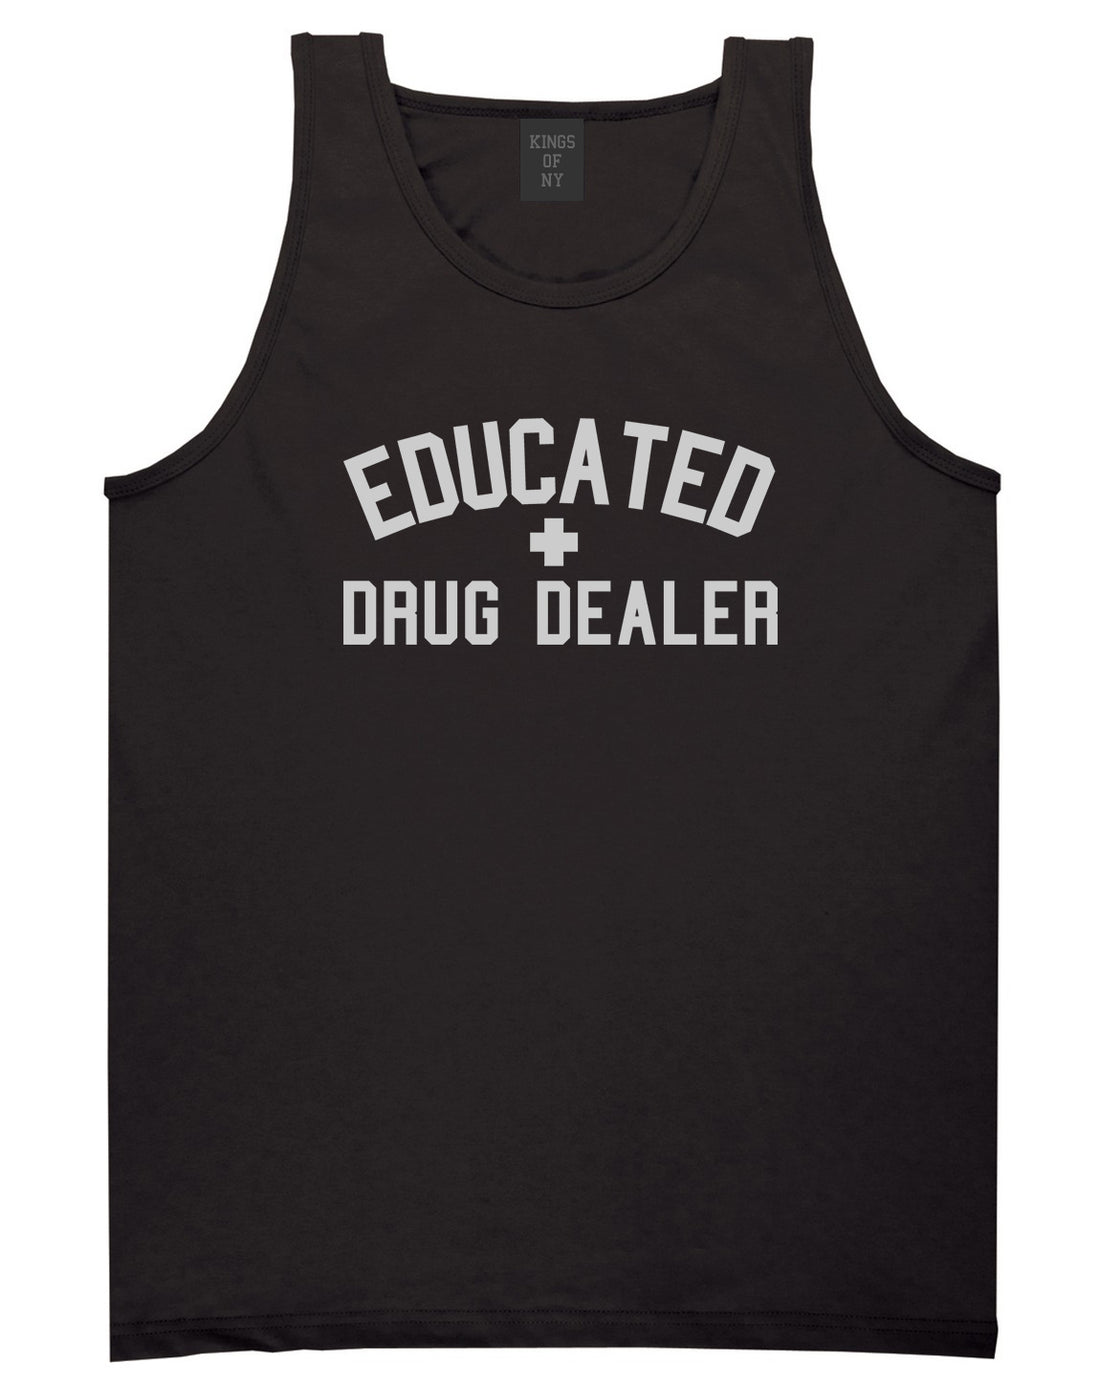 Educated Drug Dealer Mens Tank Top Shirt Black